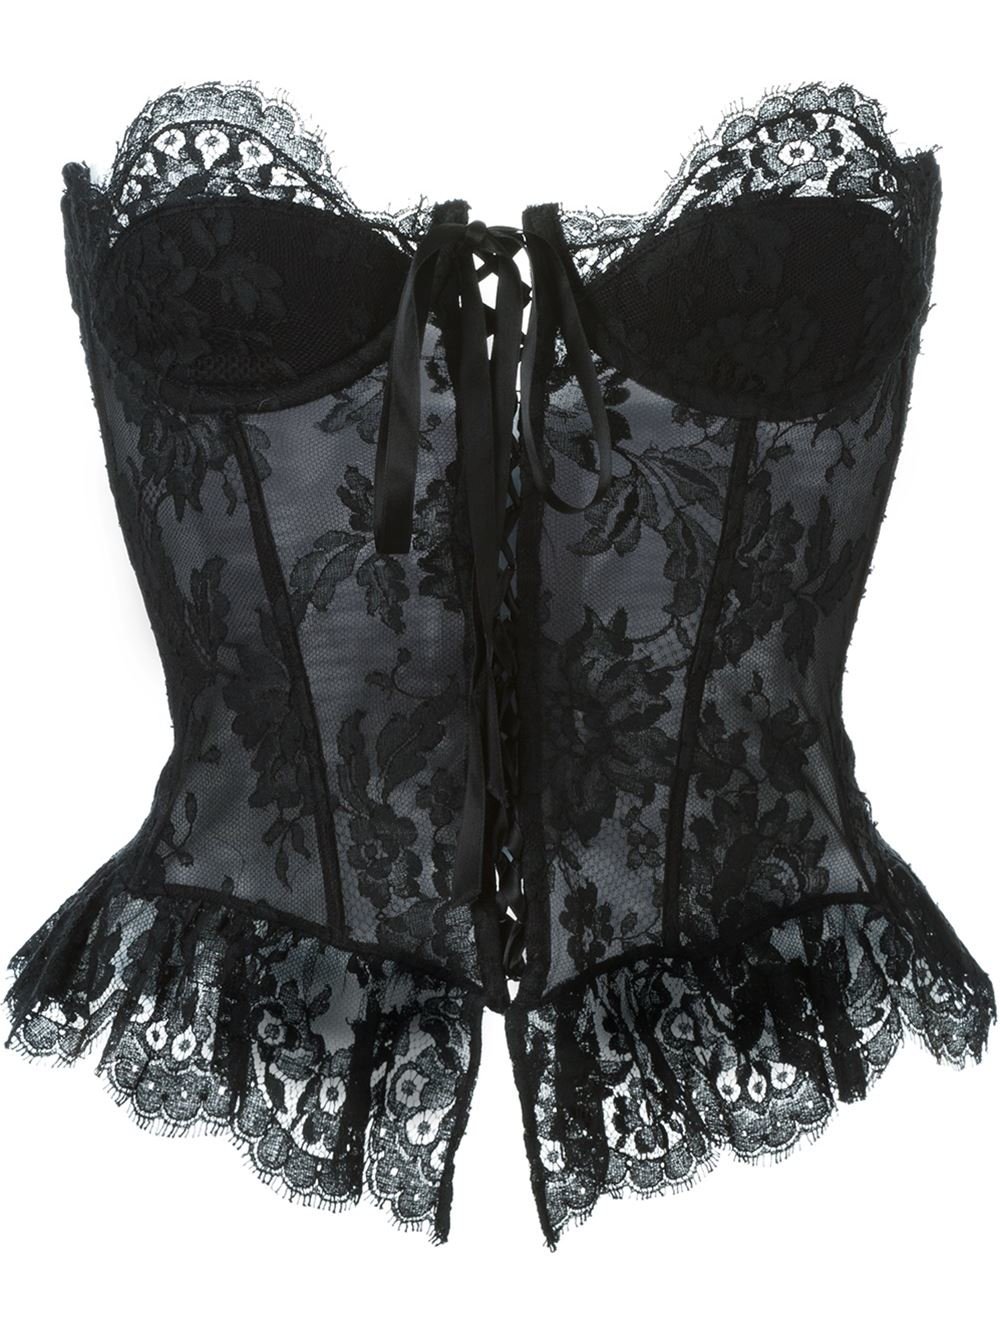 https://cdna.lystit.com/photos/1281-2015/10/16/moschino-vintage-black-lace-corset-product-0-849602835-normal.jpeg